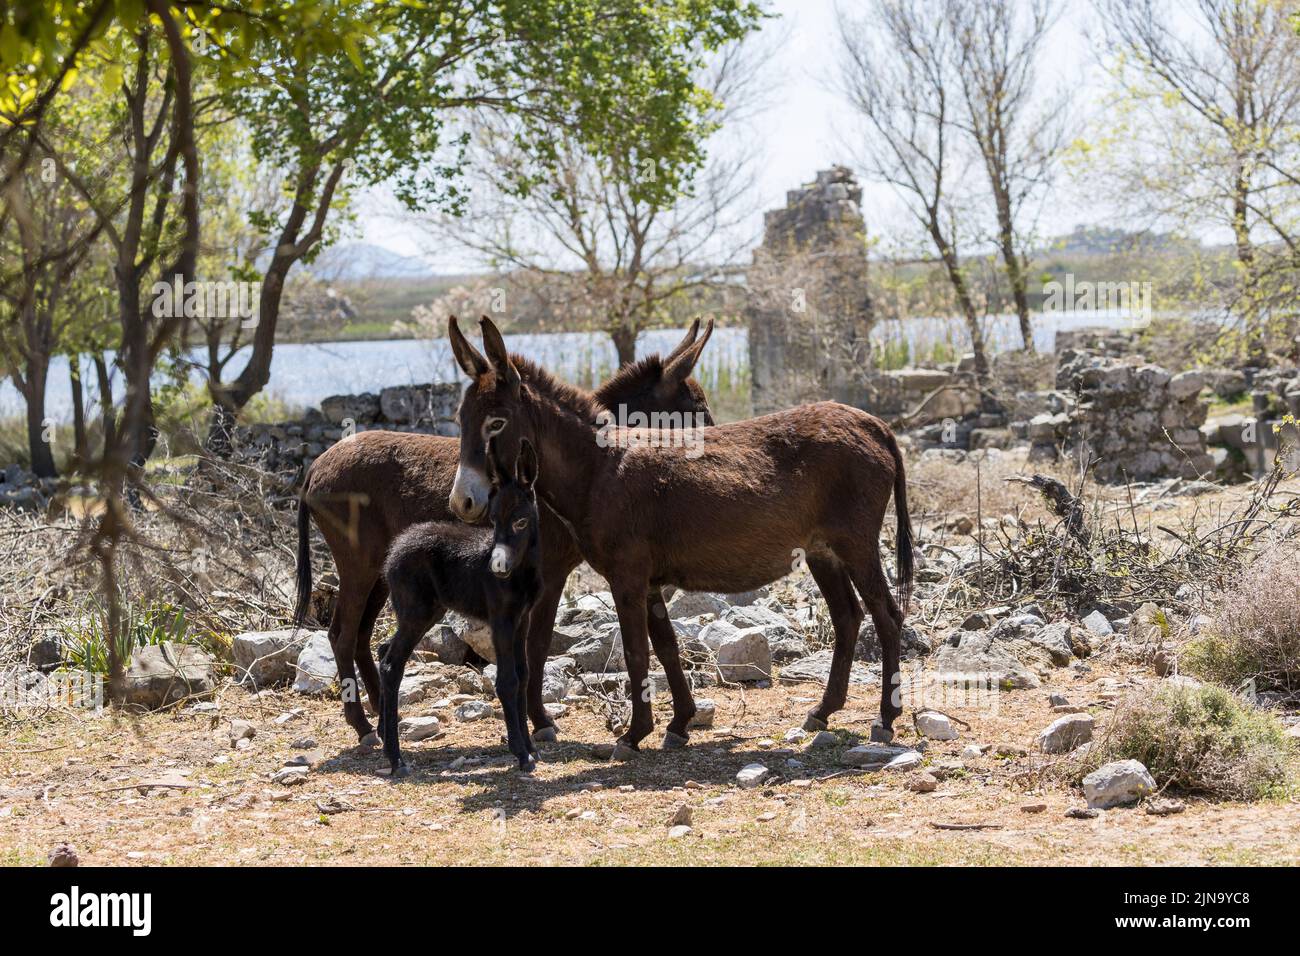 Donkeys mugla kaunos ancient site Turkey Stock Photo